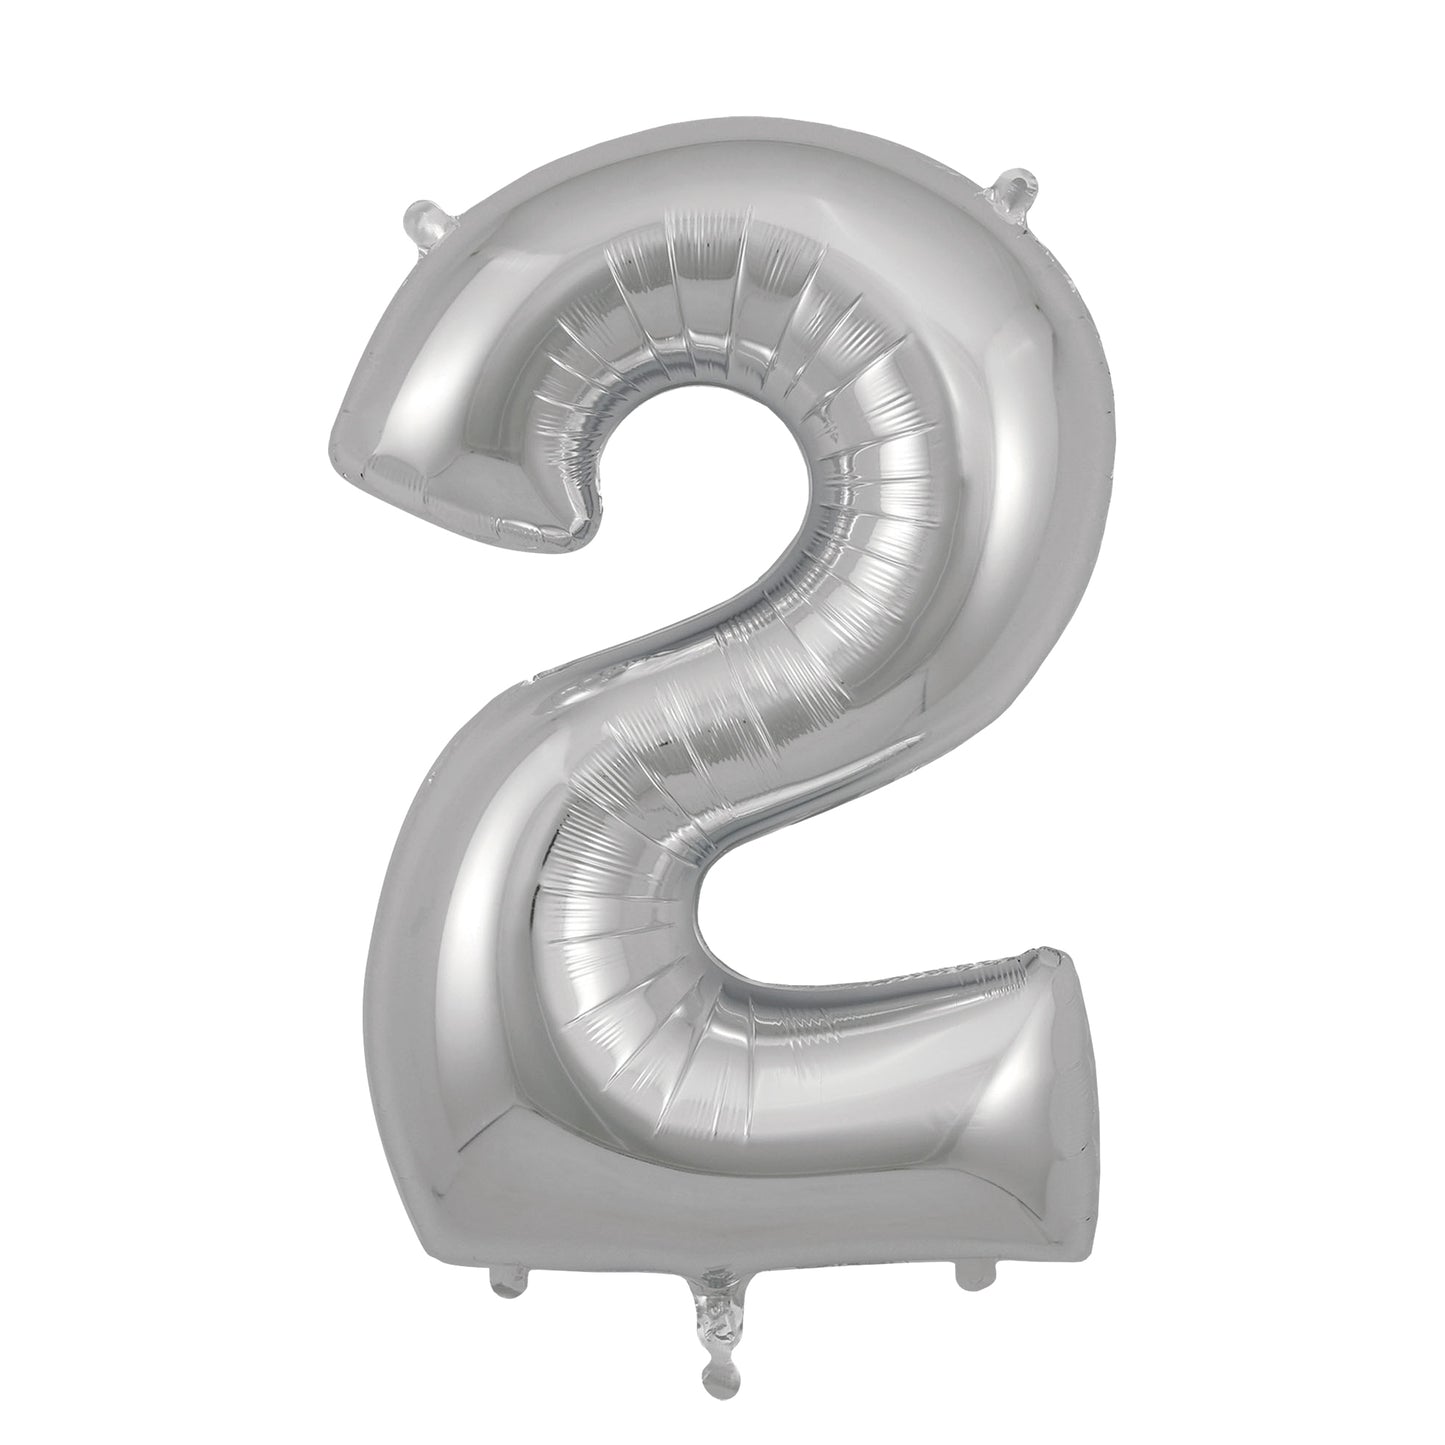 NUMERO ARGENTATO "2"– Foil Balloon